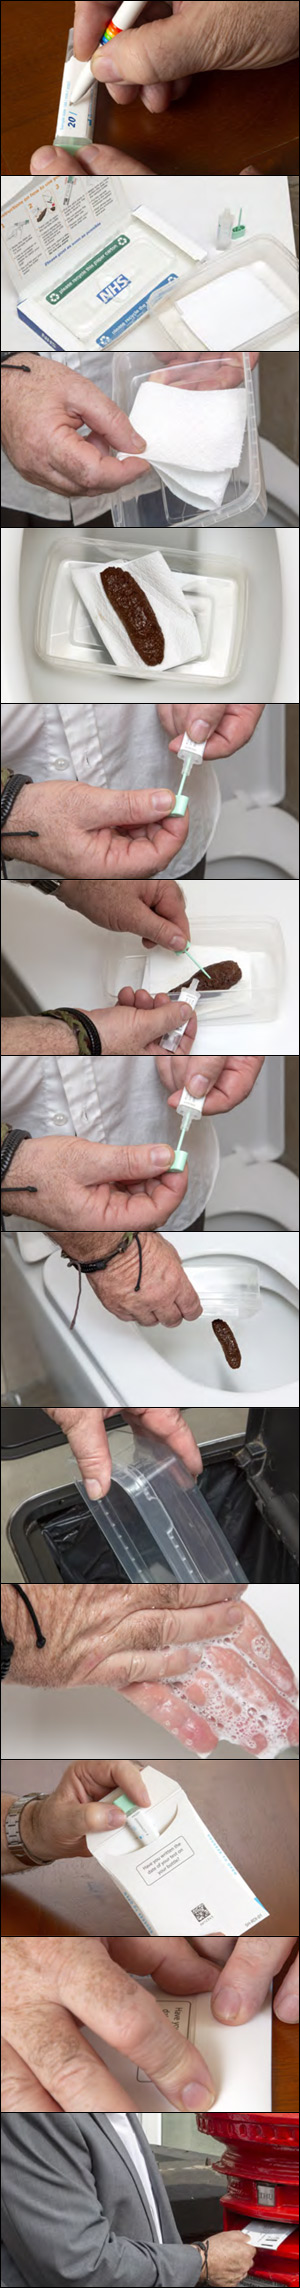 bowel-cancer-screening-kit-instructions